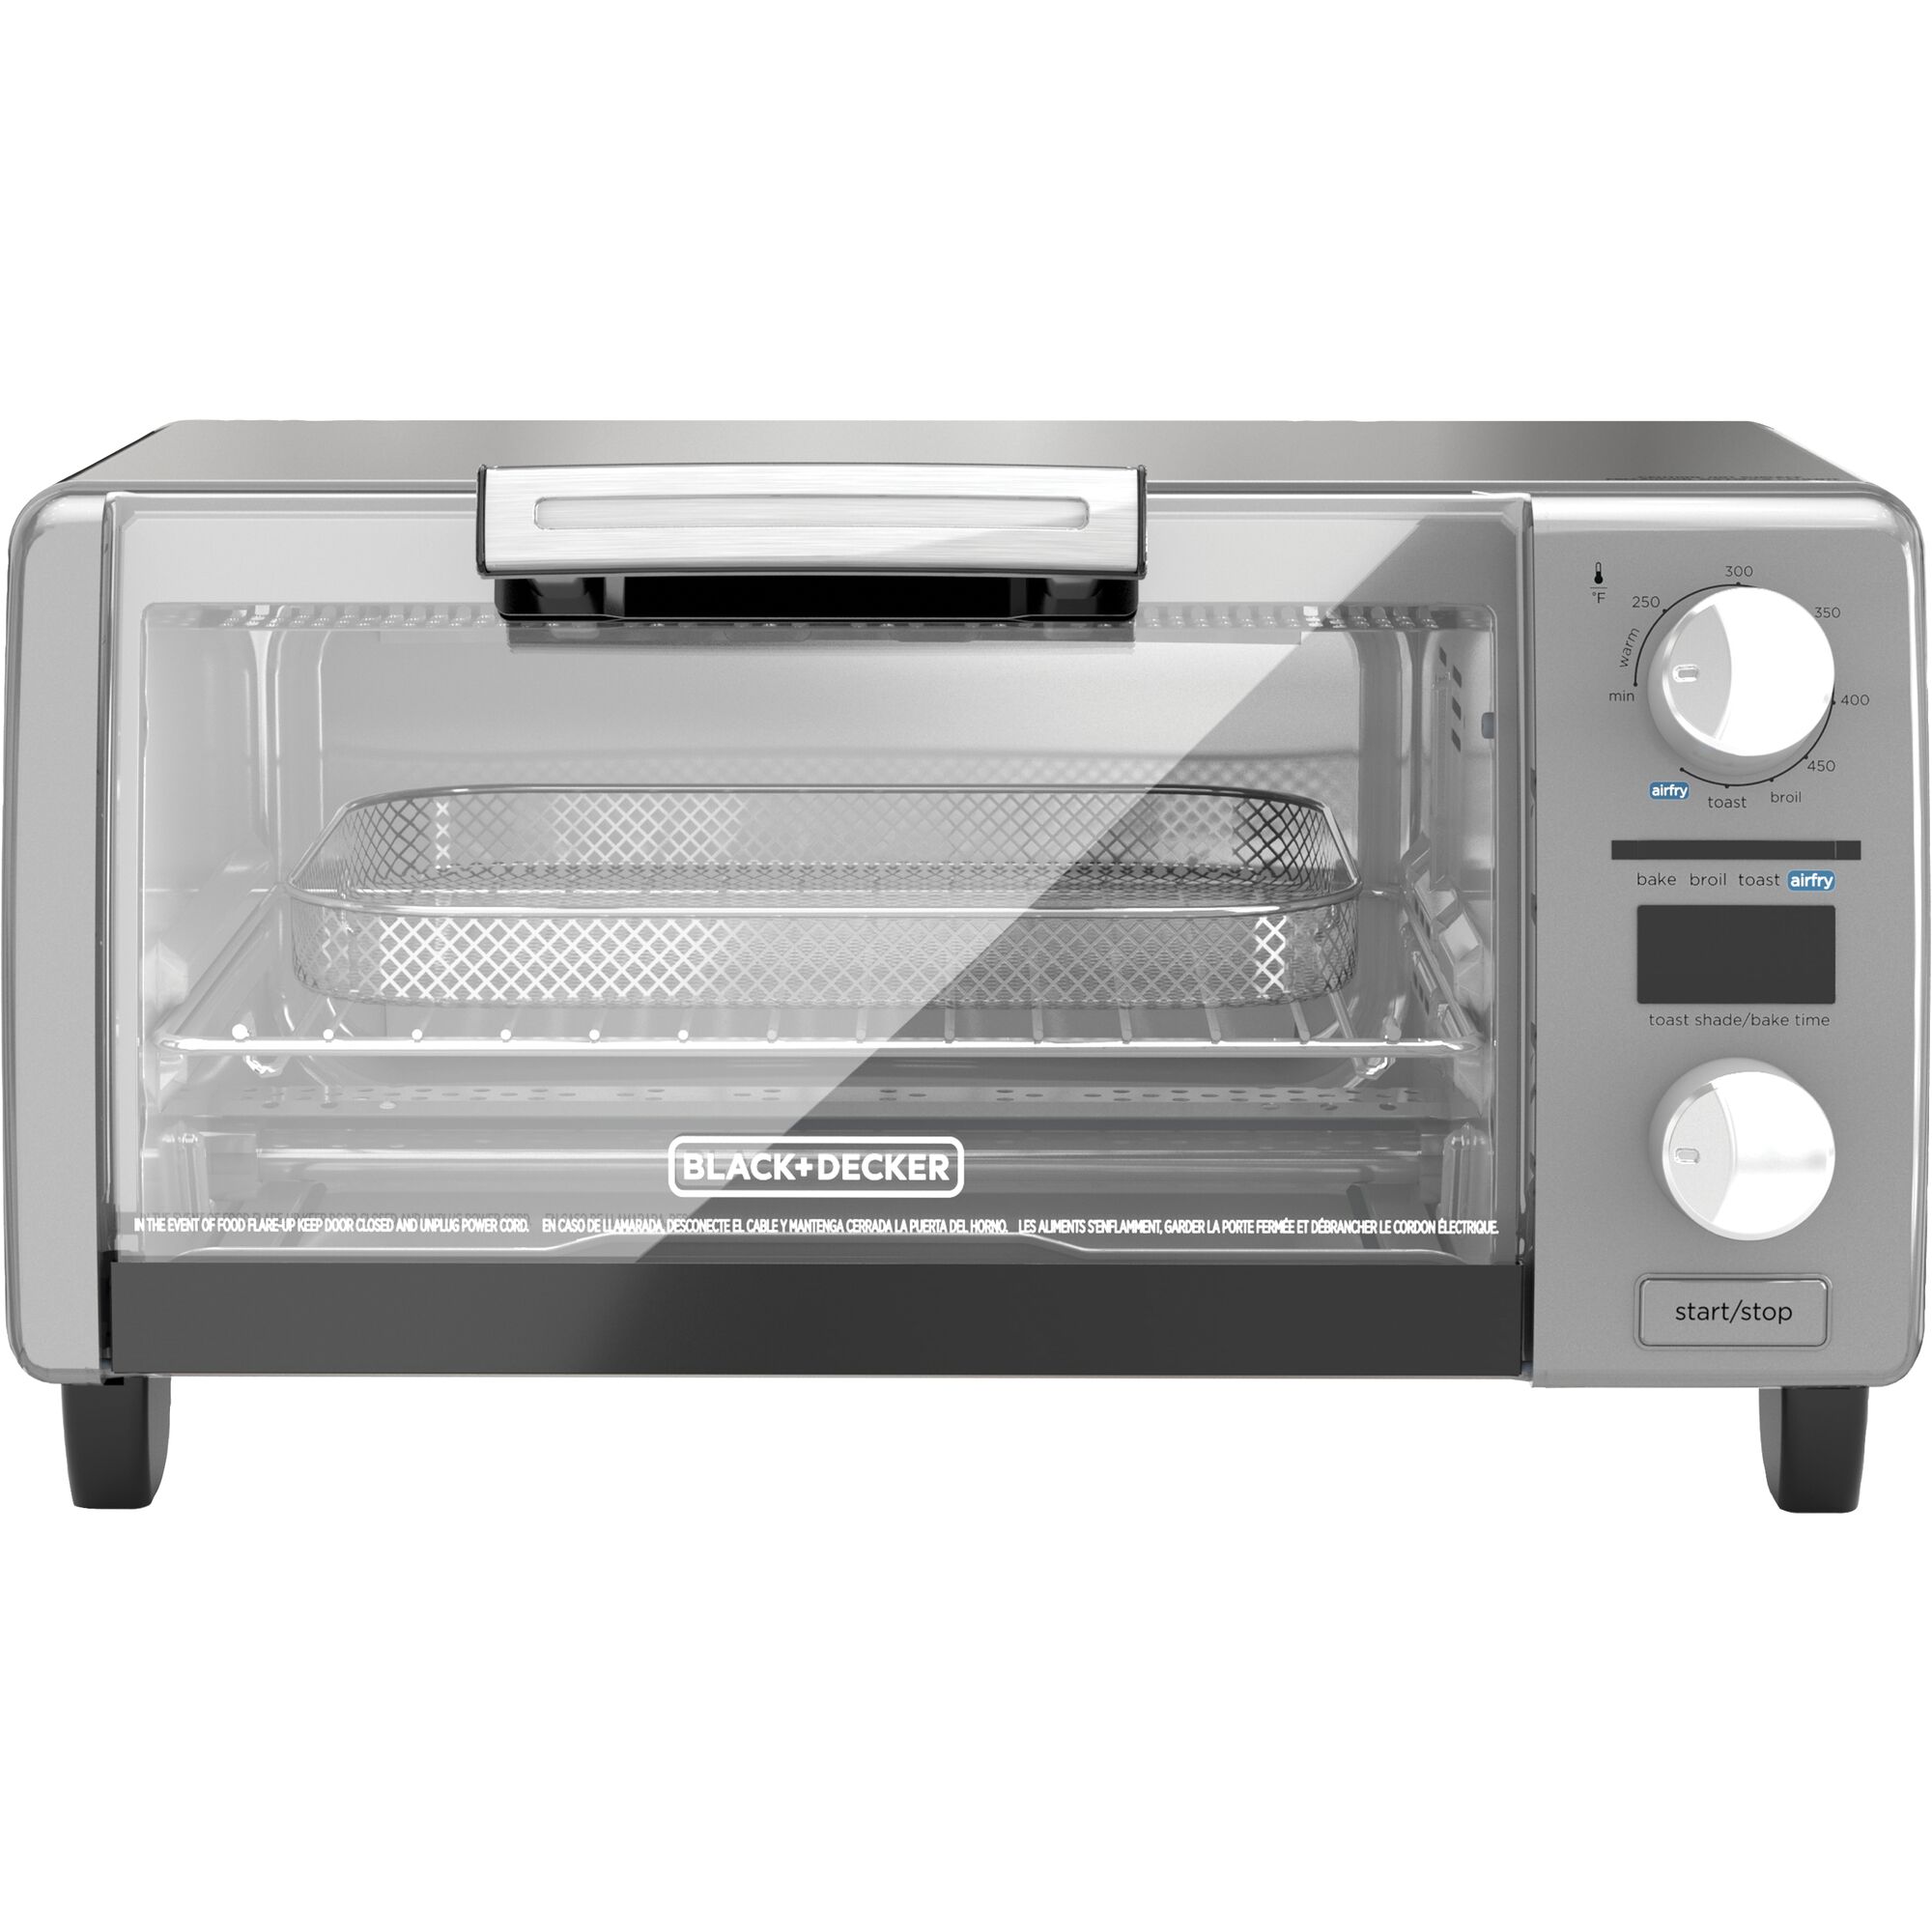 Profile of crisp n bake air fry digital 4 slice toaster oven.